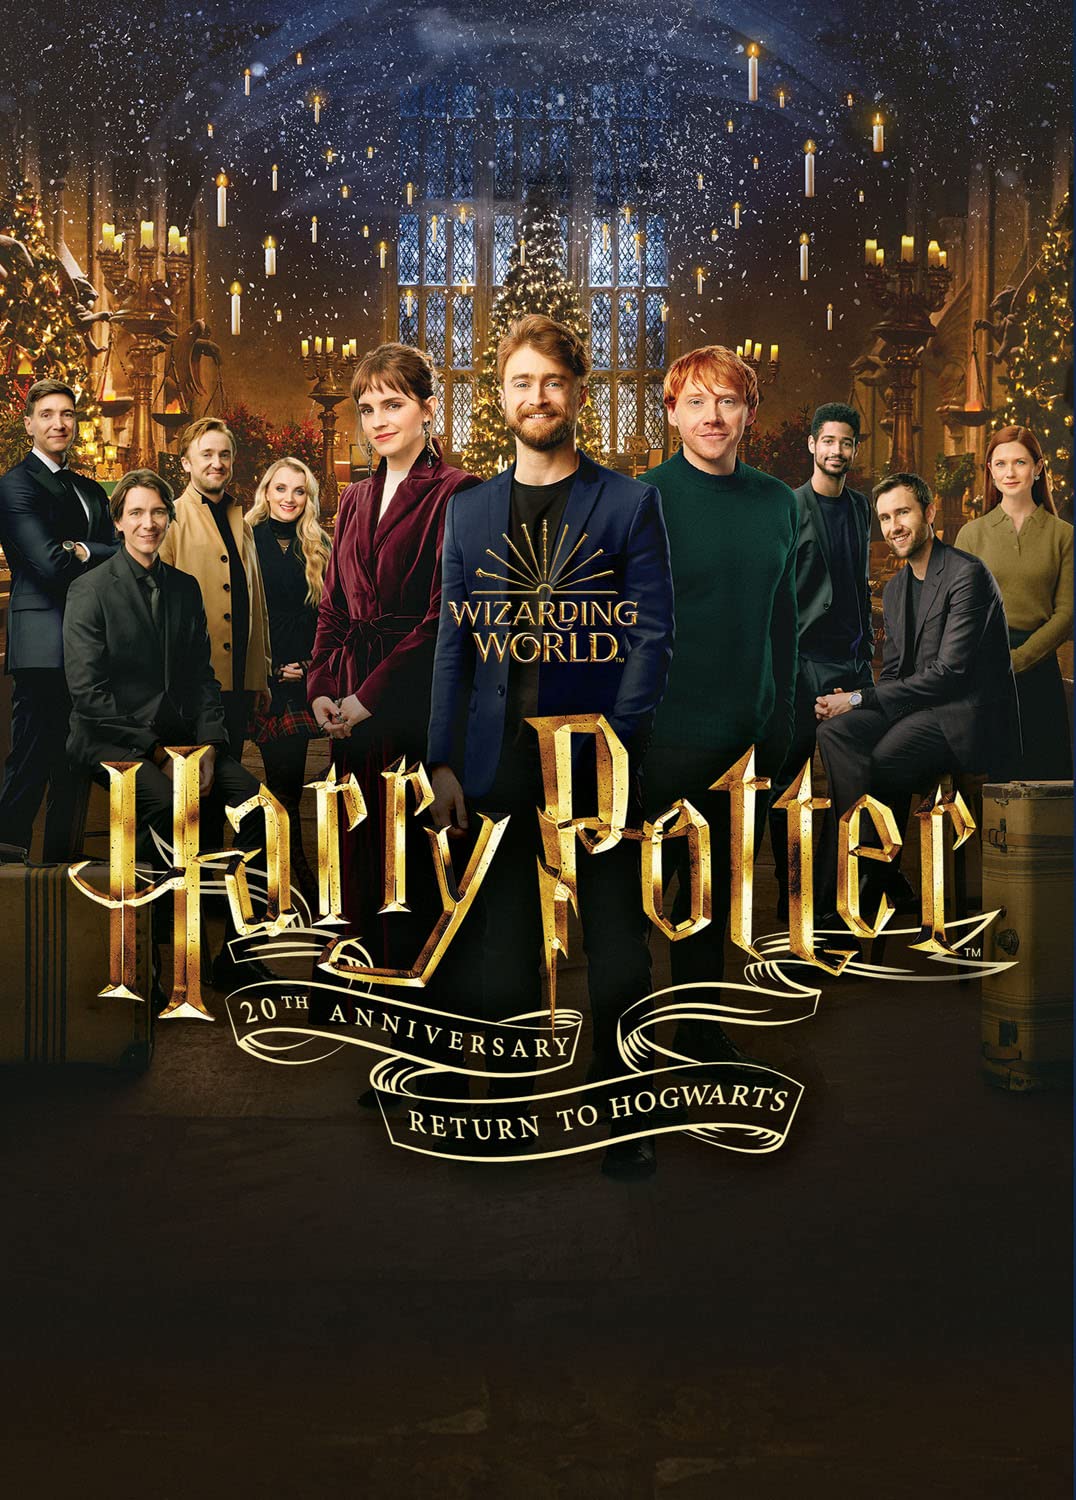 Harry Potter DVD